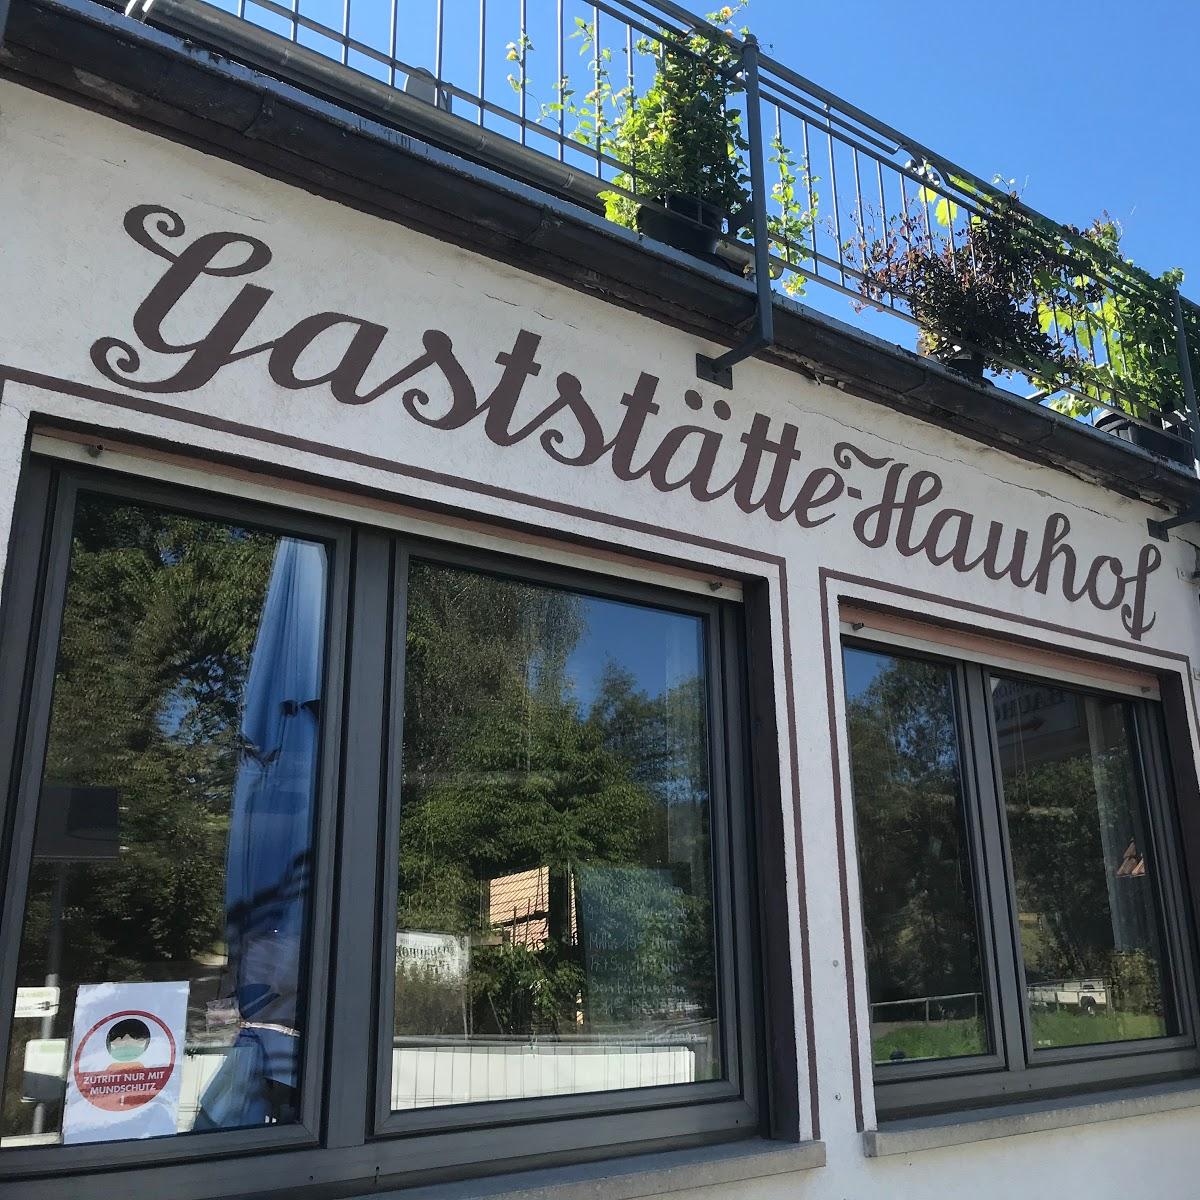 Restaurant "Schnitzel Stub‘n Hauhof" in Mömbris